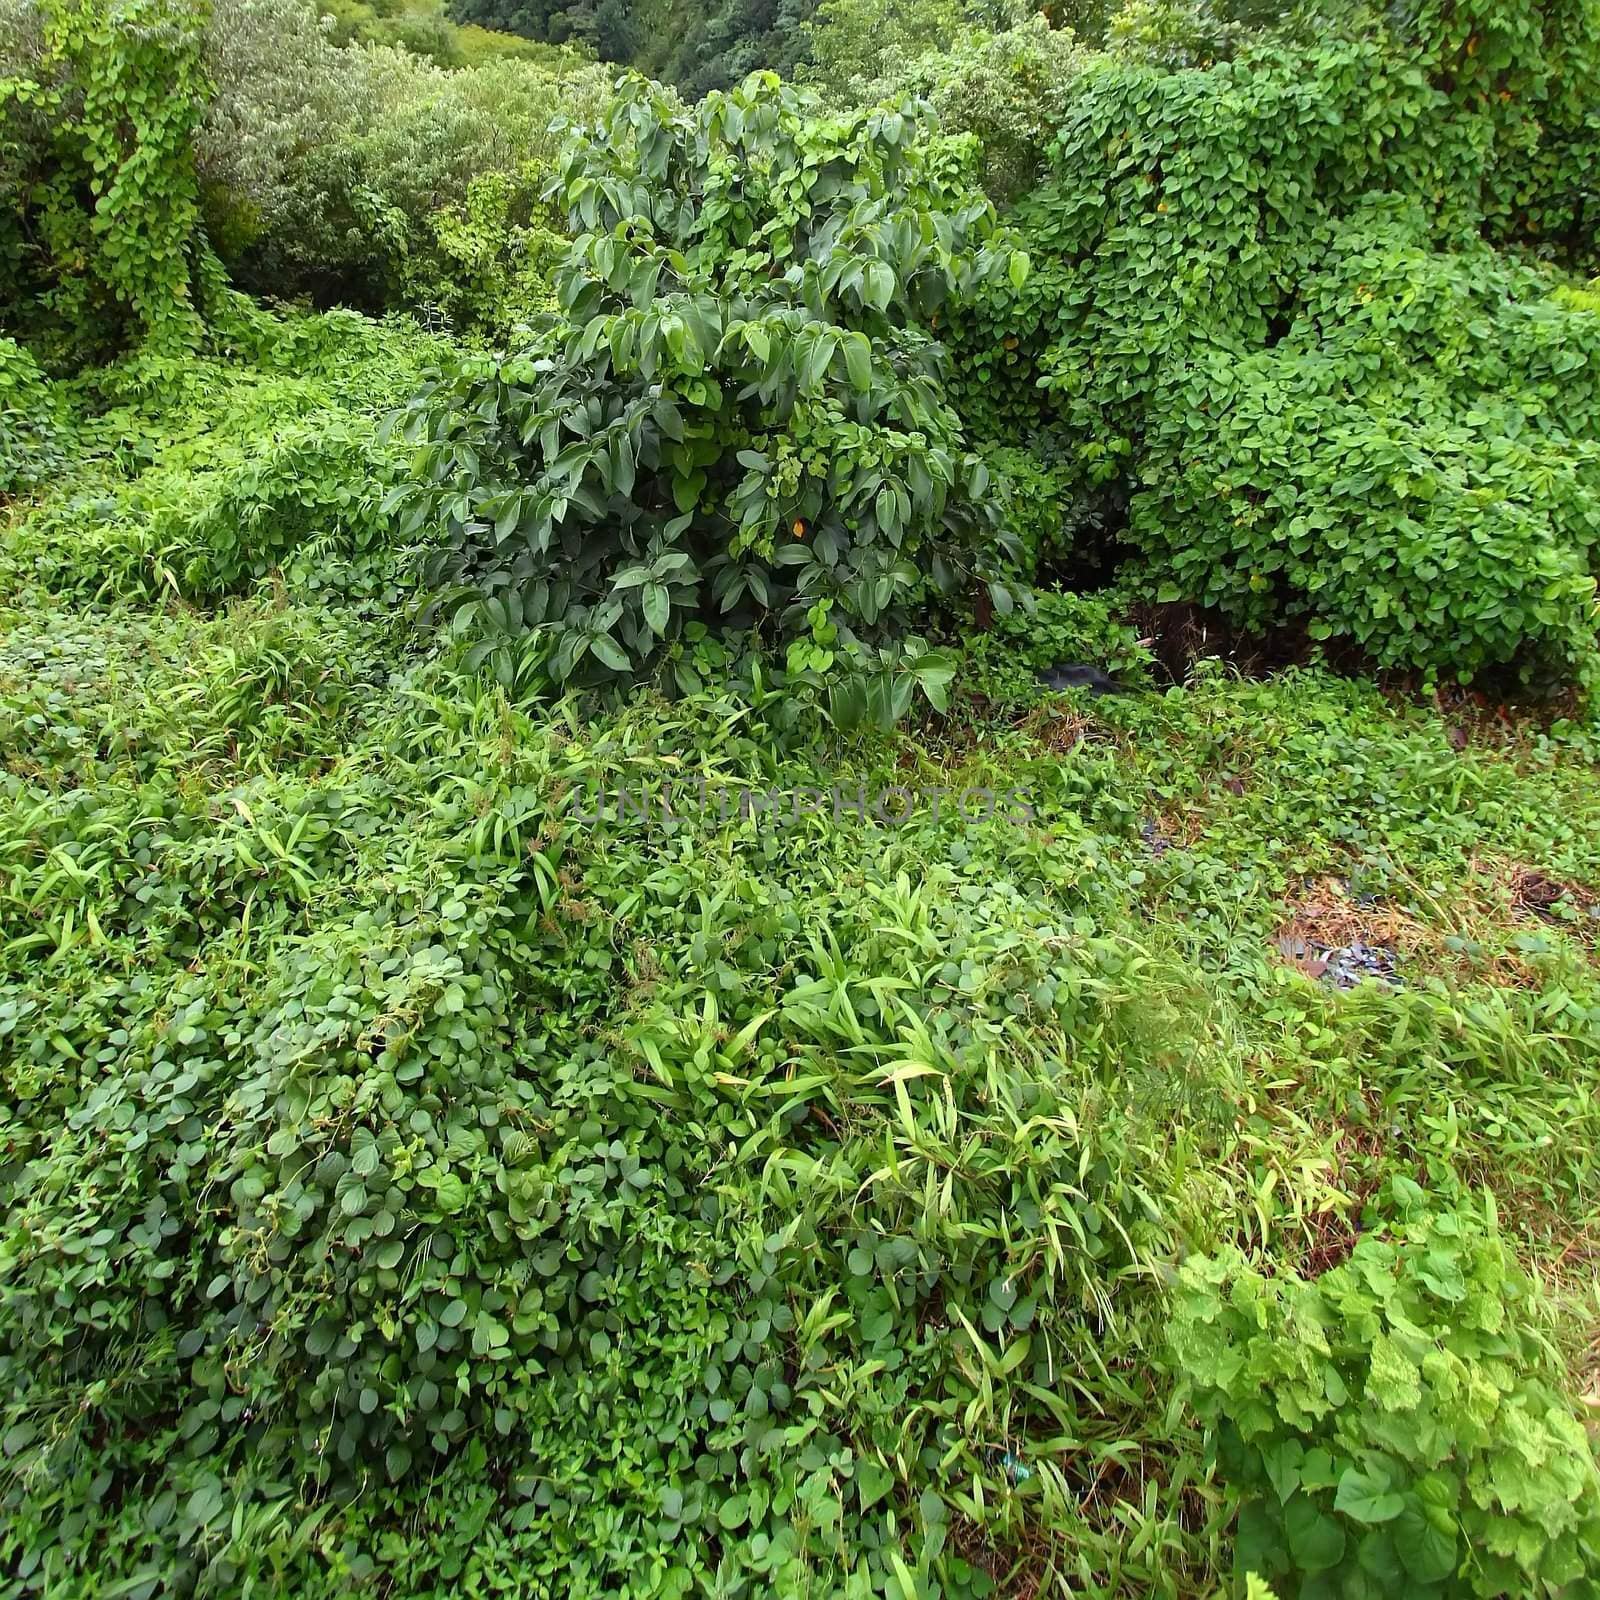 Tropical vegetation on the Caribbean island of Saint Lucia.